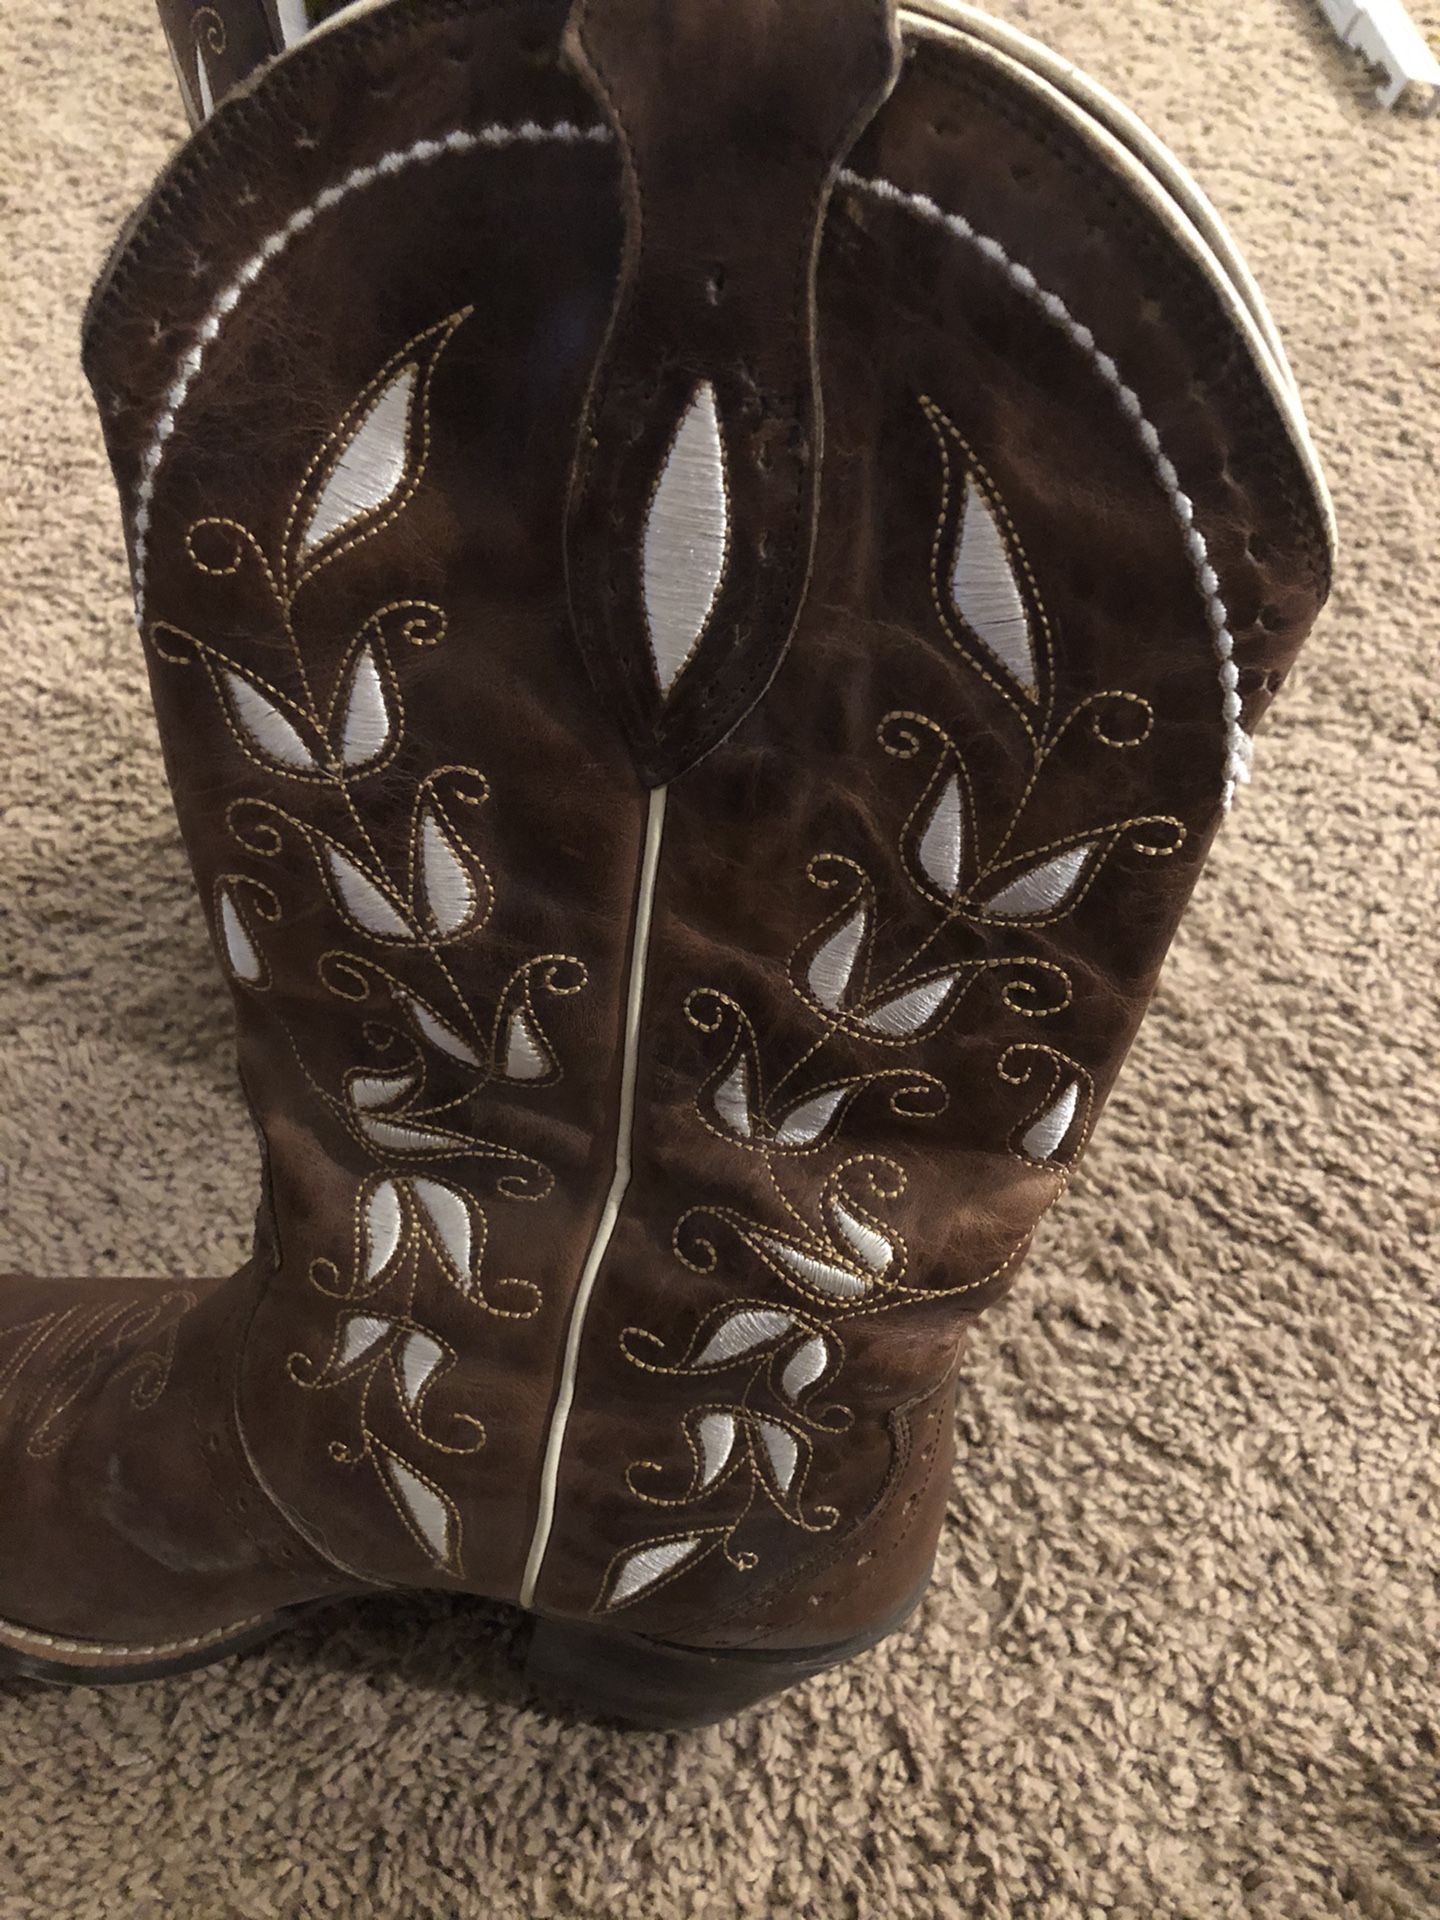 Women’s cowboy boots